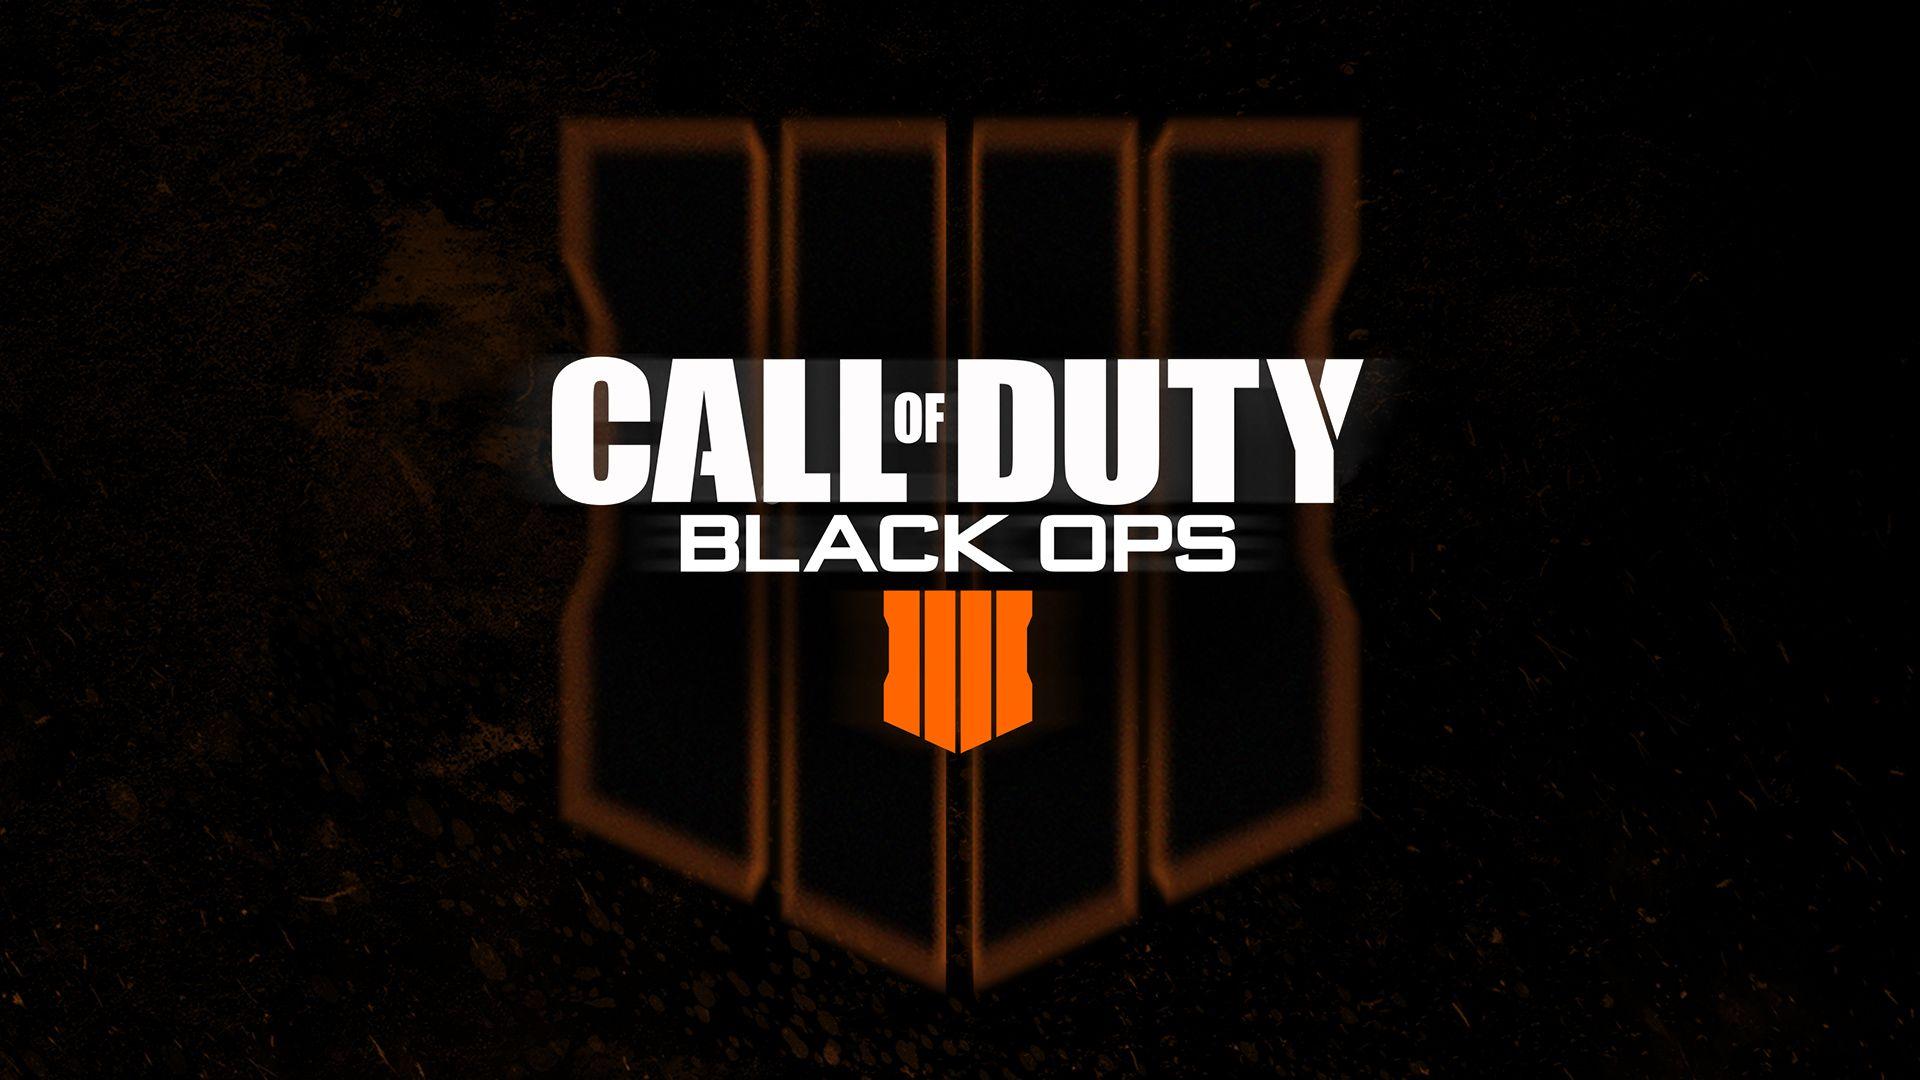 Call Of Duty Black Ops HD Games, 4k Wallpaper, Image